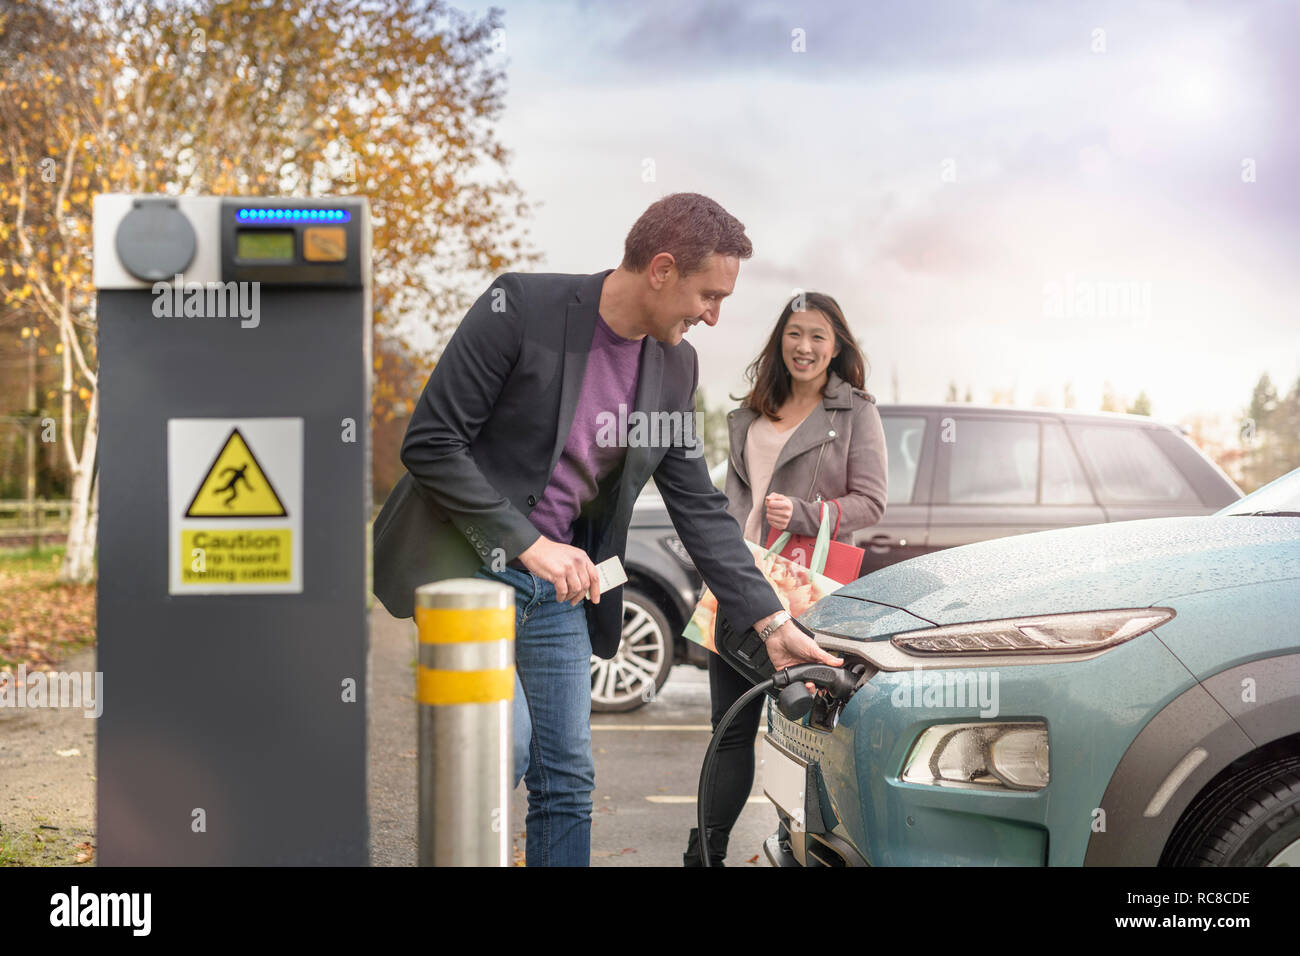 Man and woman charging electric car at car charging park, Manchester, UK Stock Photo